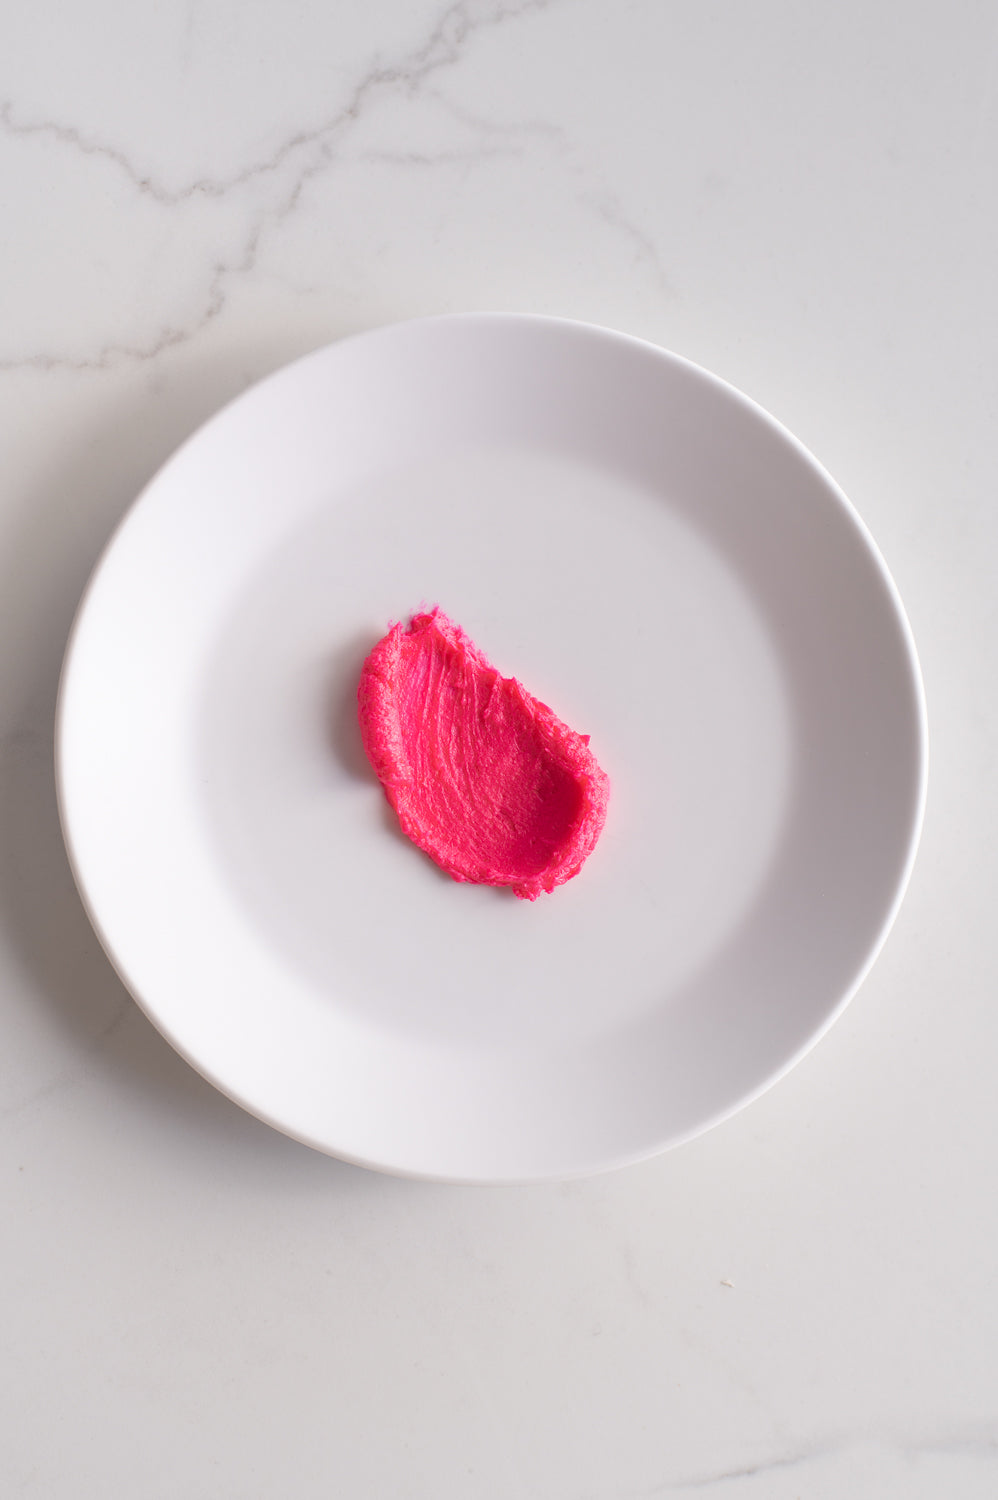 An organic shape of pink buttercream icing on a plate